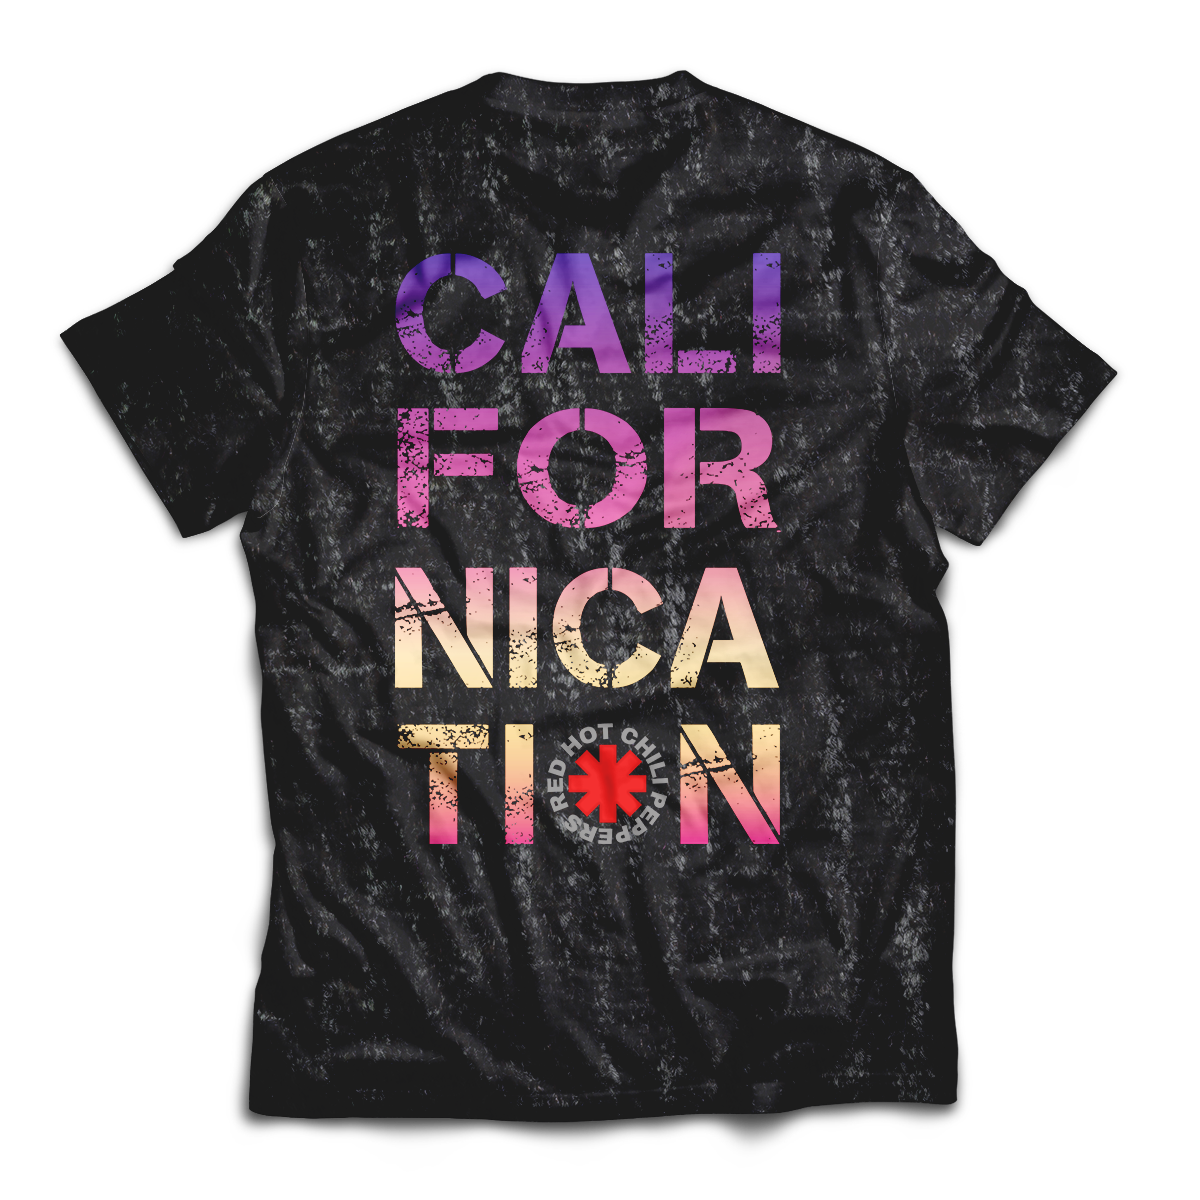 Californication Unisex T-Shirt